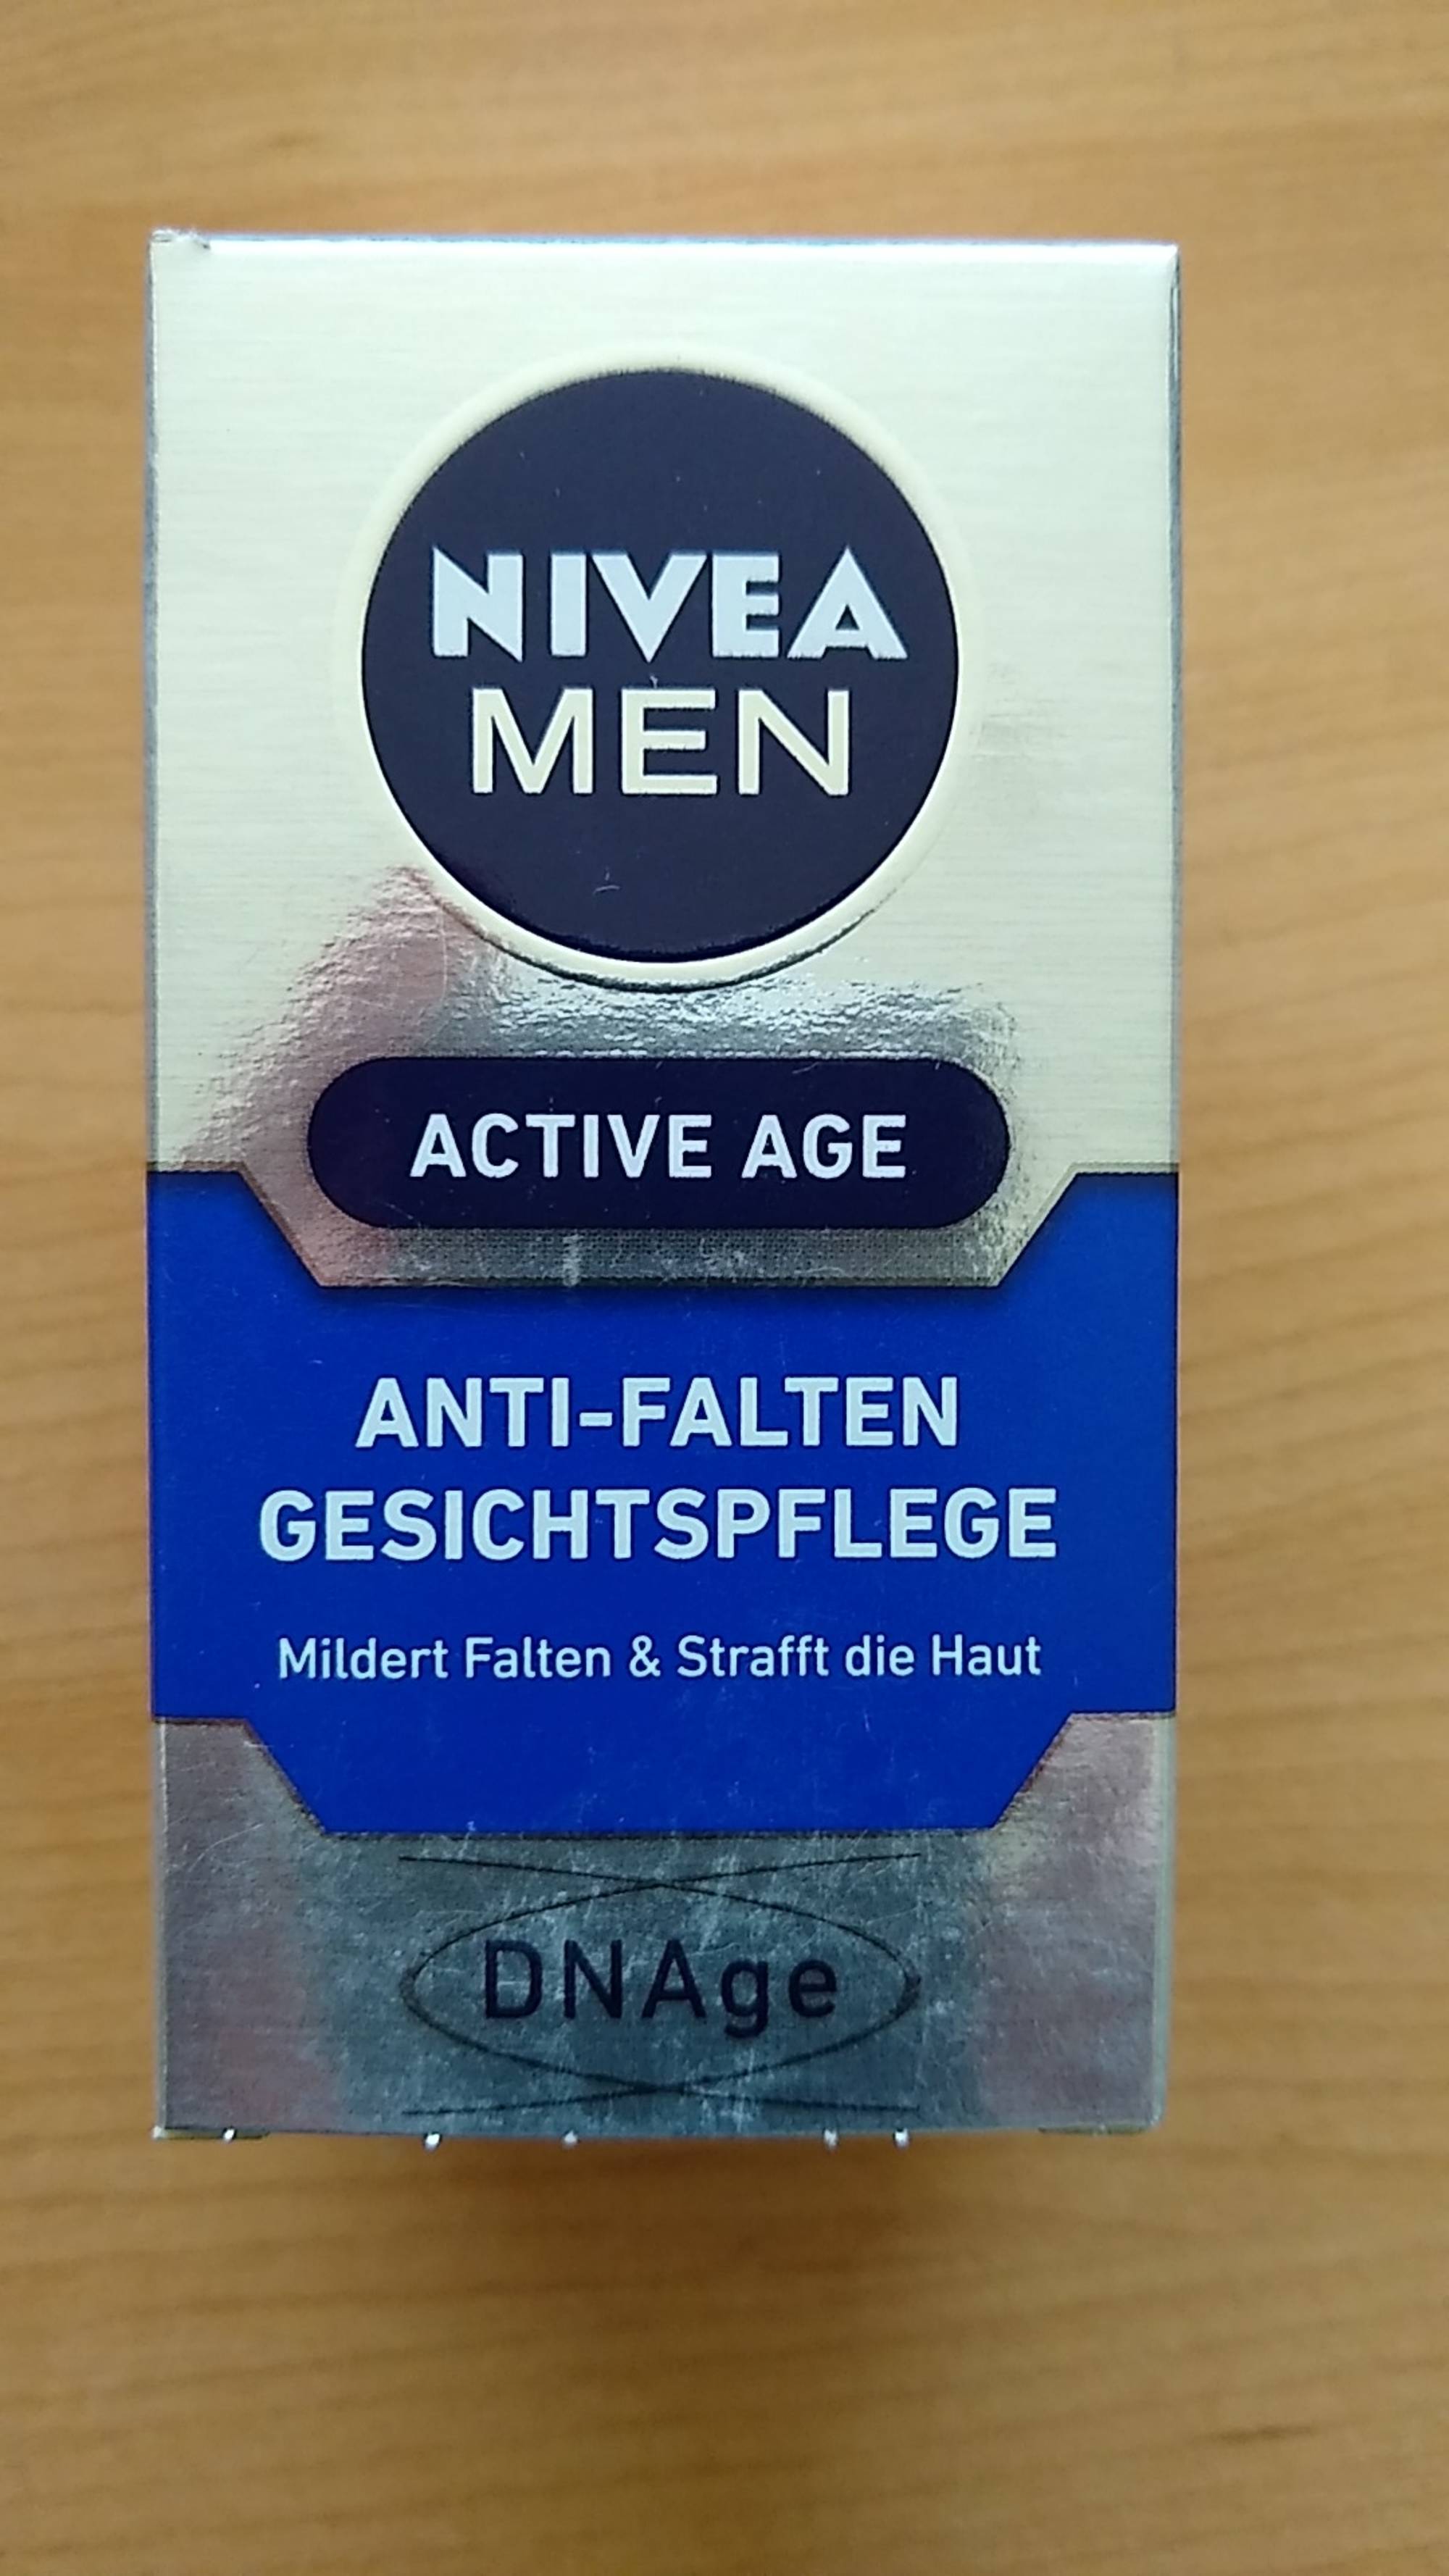 NIVEA - Men active age - Anti-falten gesichtspflege DNAge